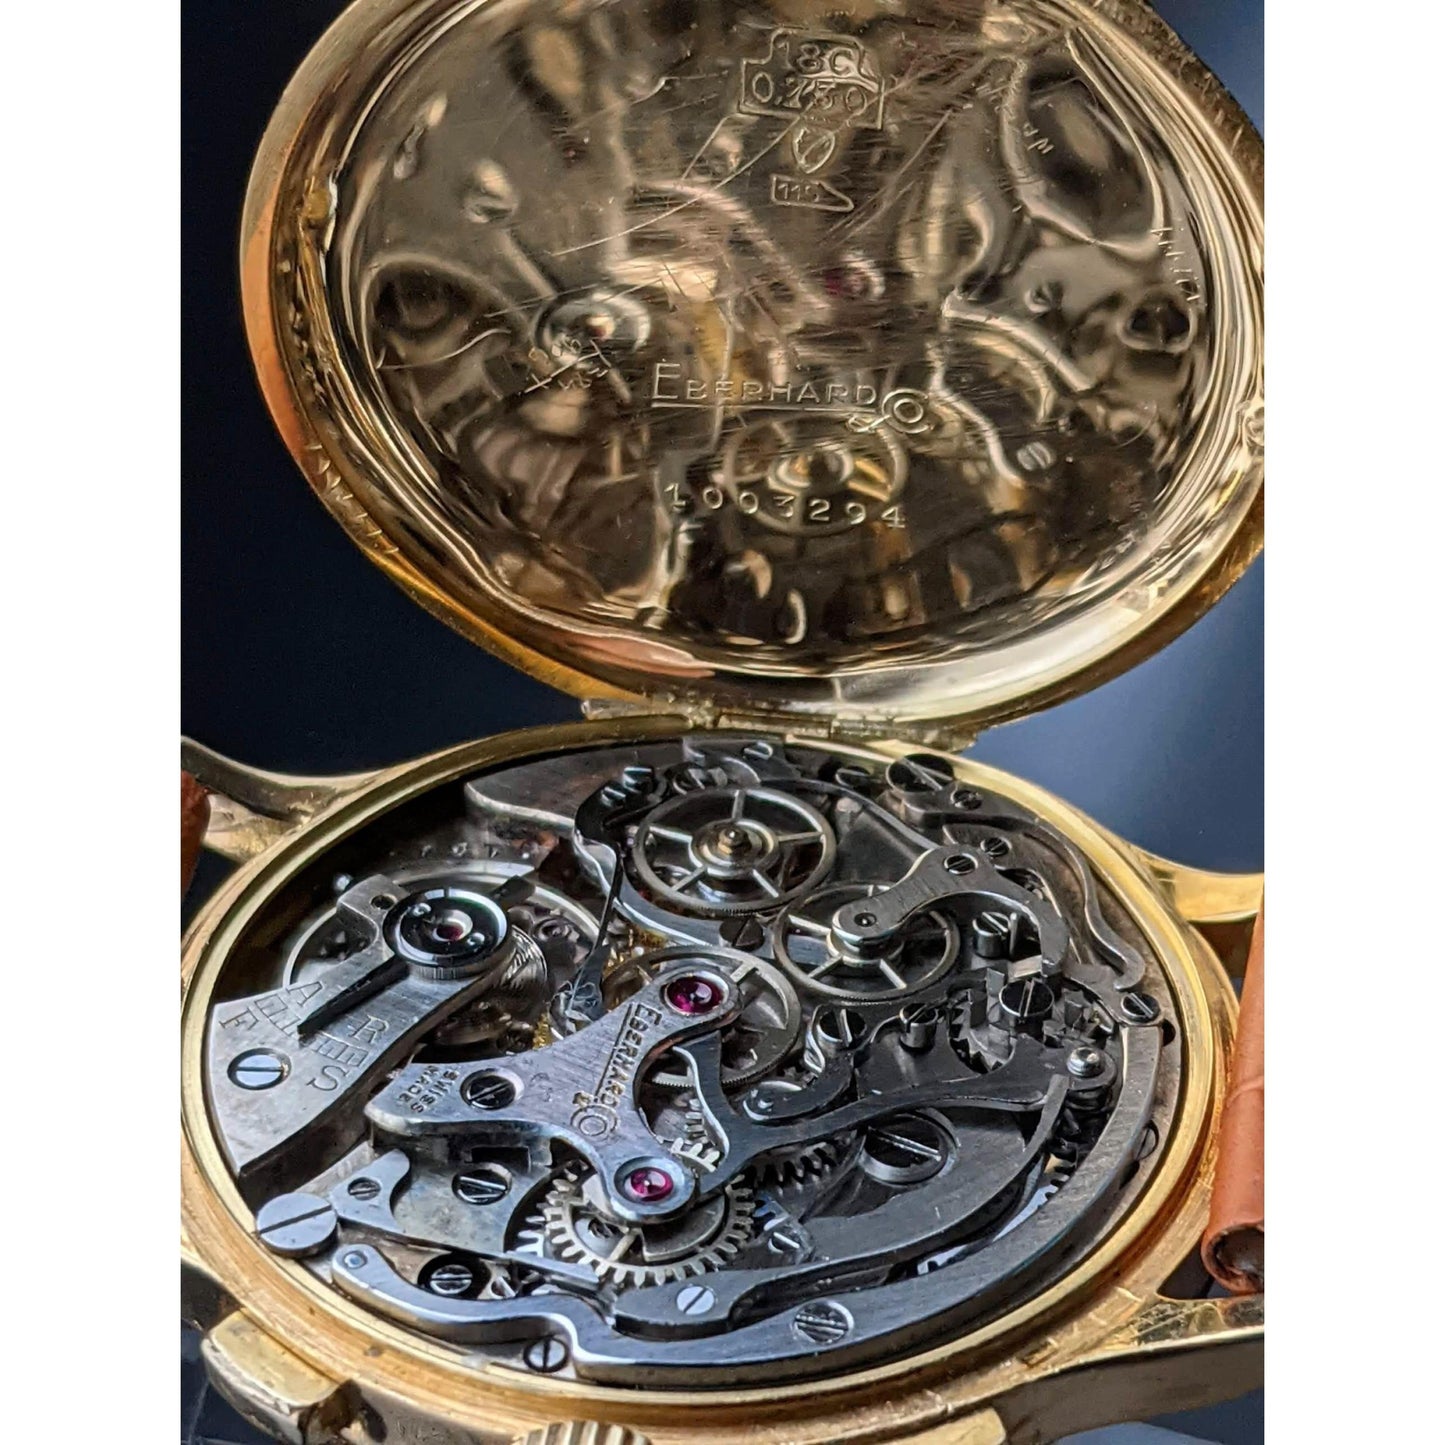 Eberhard & Co. Rare Extra-Fort Chronograph 18k Gold Vintage Watch 1940 - Calibre 1600